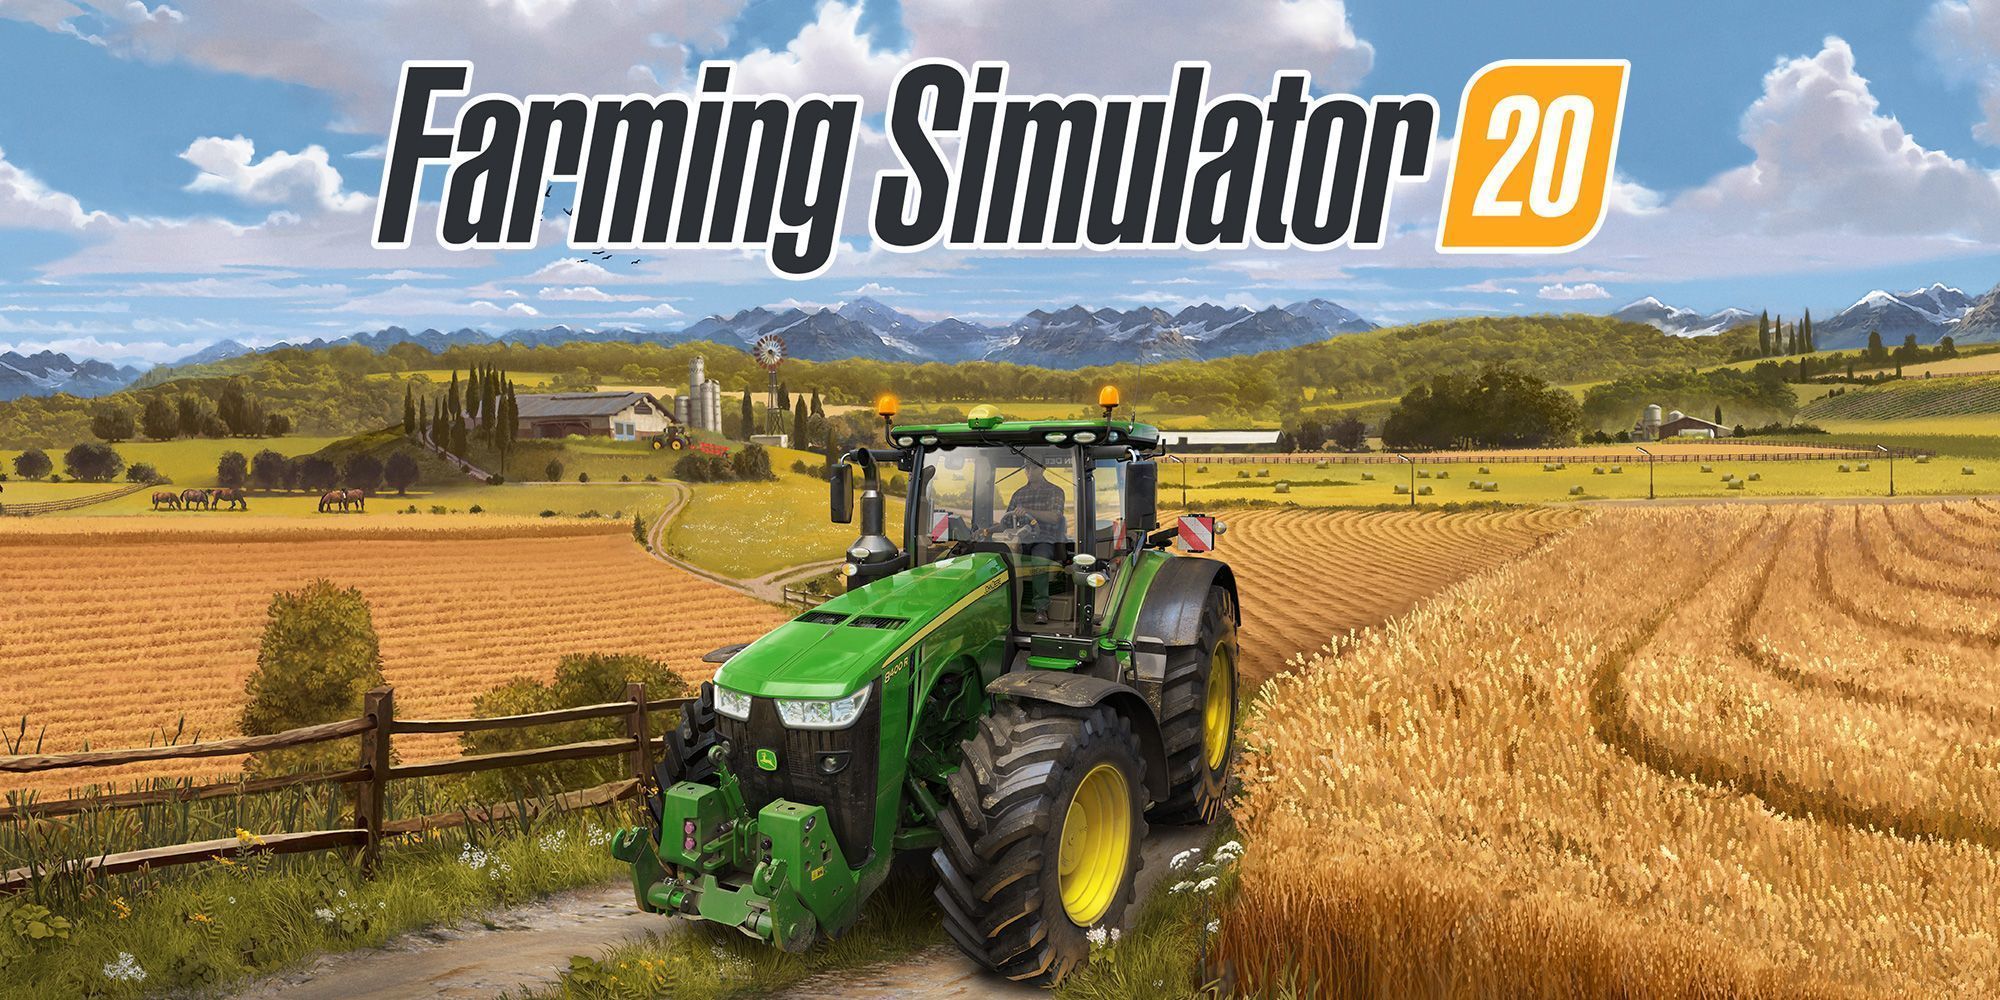 download free farming sim 2022